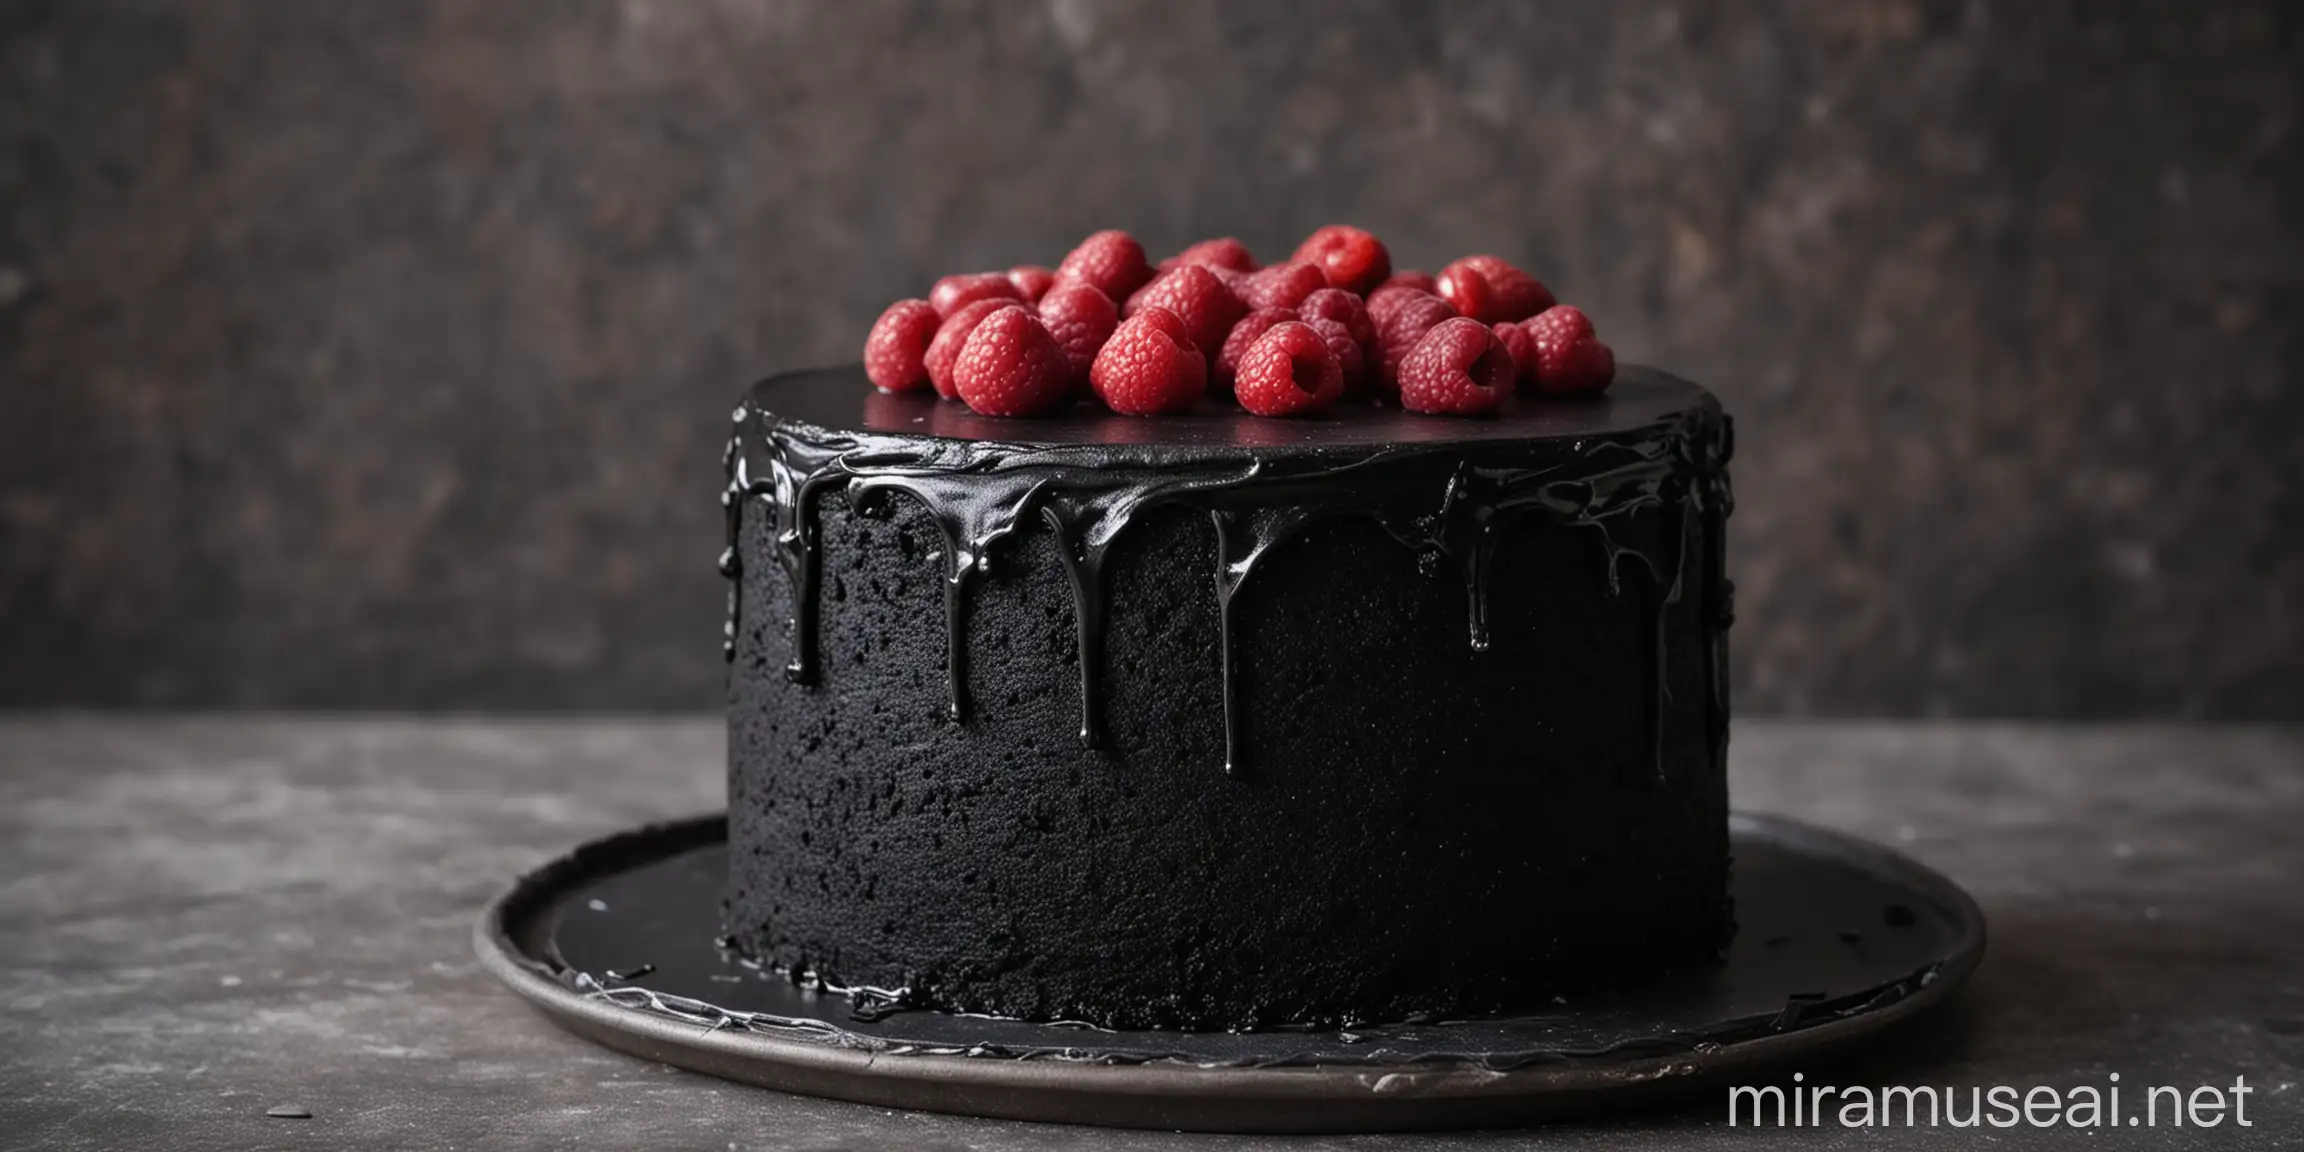 round black cake
